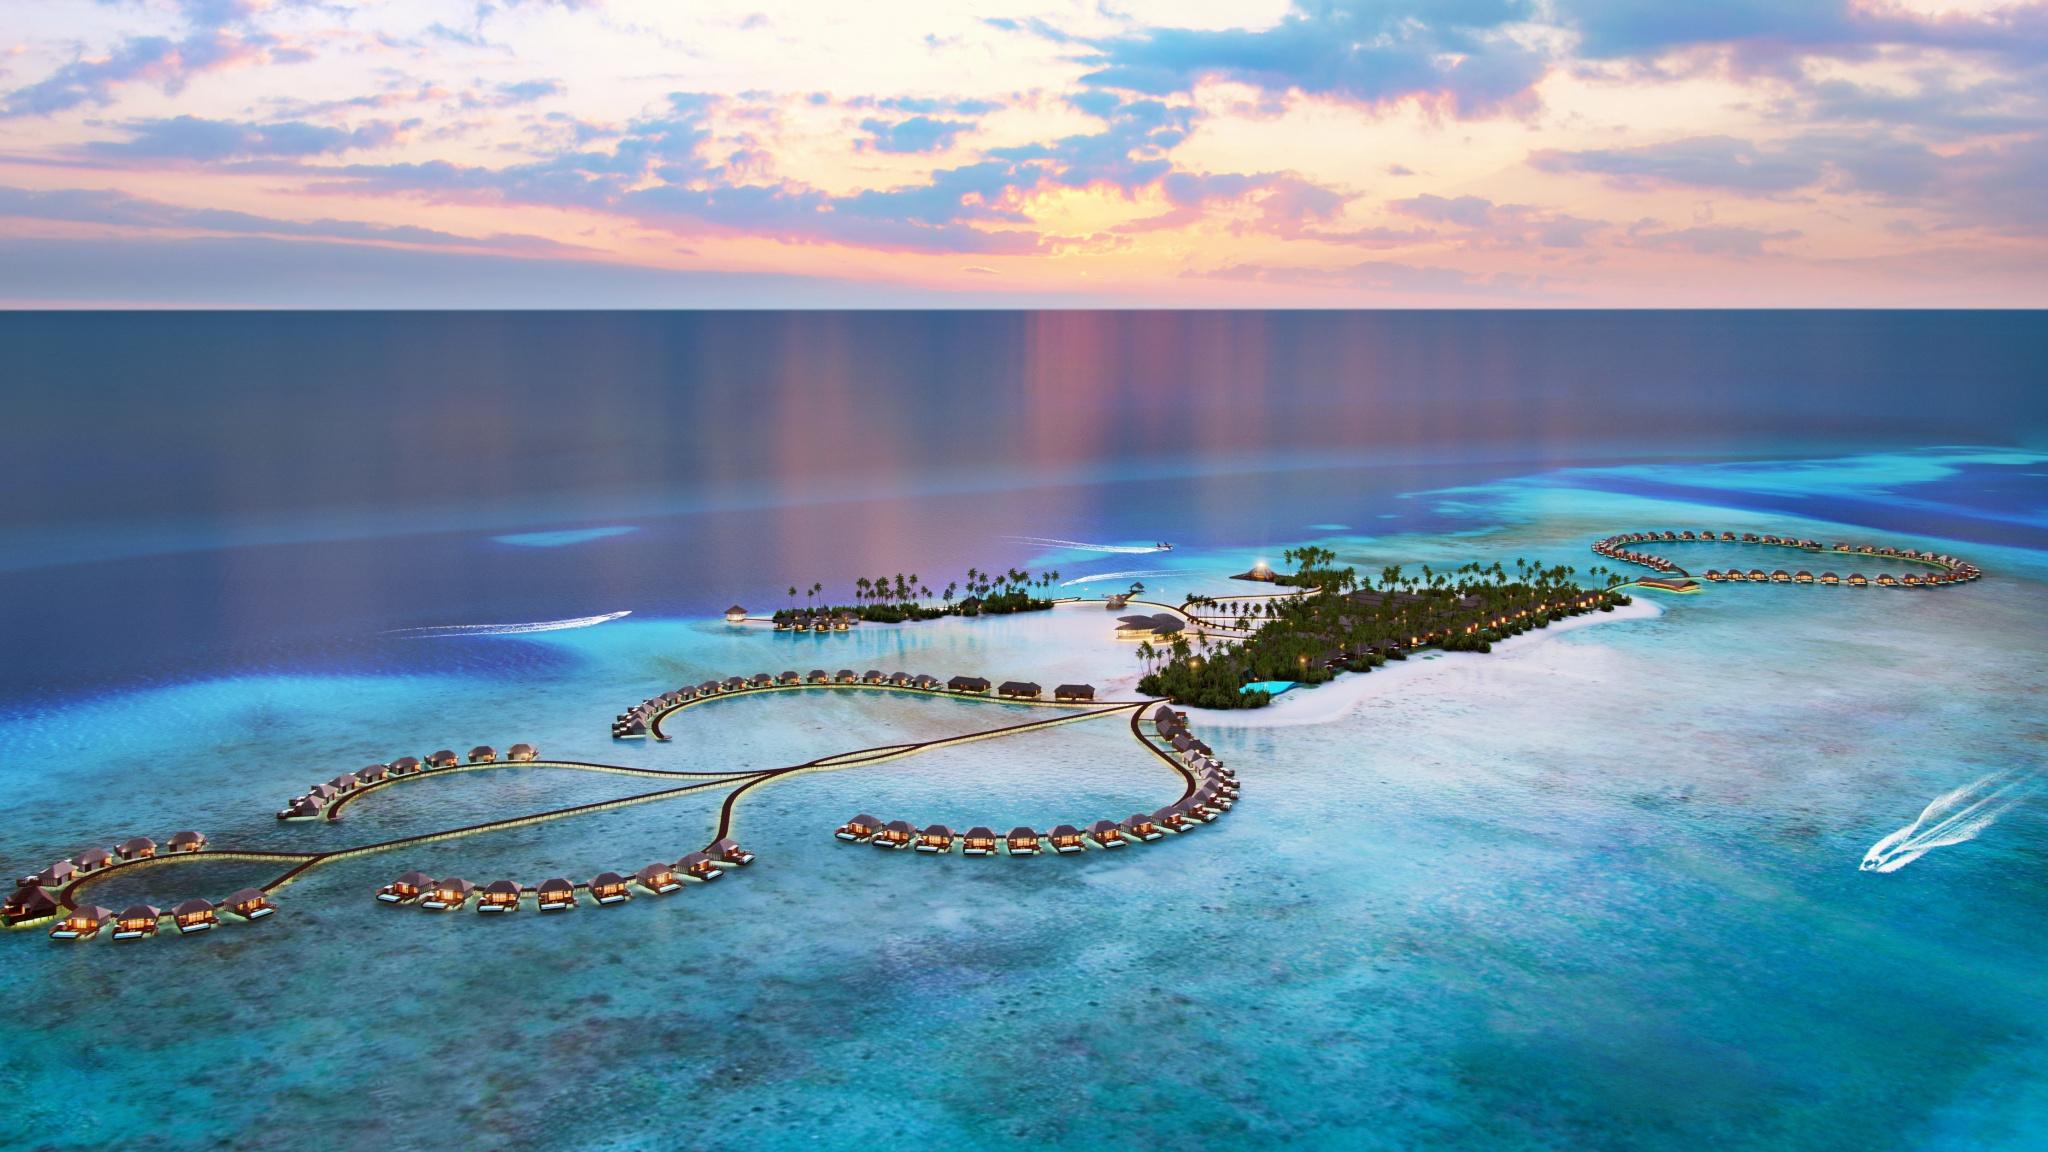 Download 2048x1152 wallpaper maldives, resorts, aerial view, island